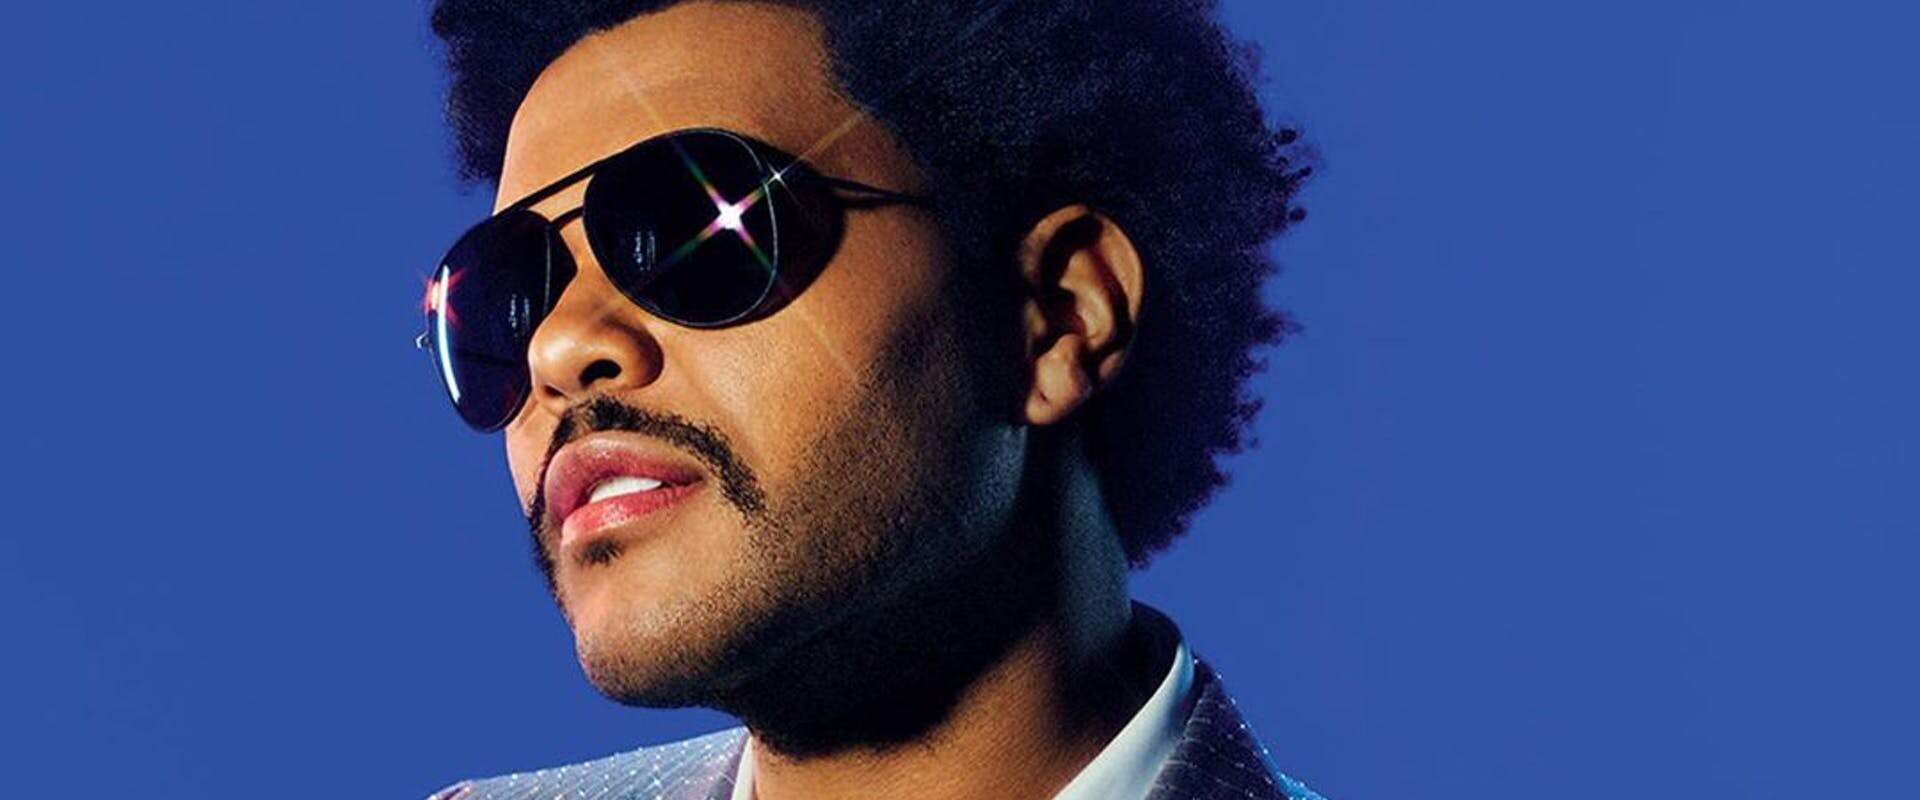 Após ser ignorado, The Weeknd anuncia que vai boicotar o Grammy ‘para sempre’ - Metropolitana FM